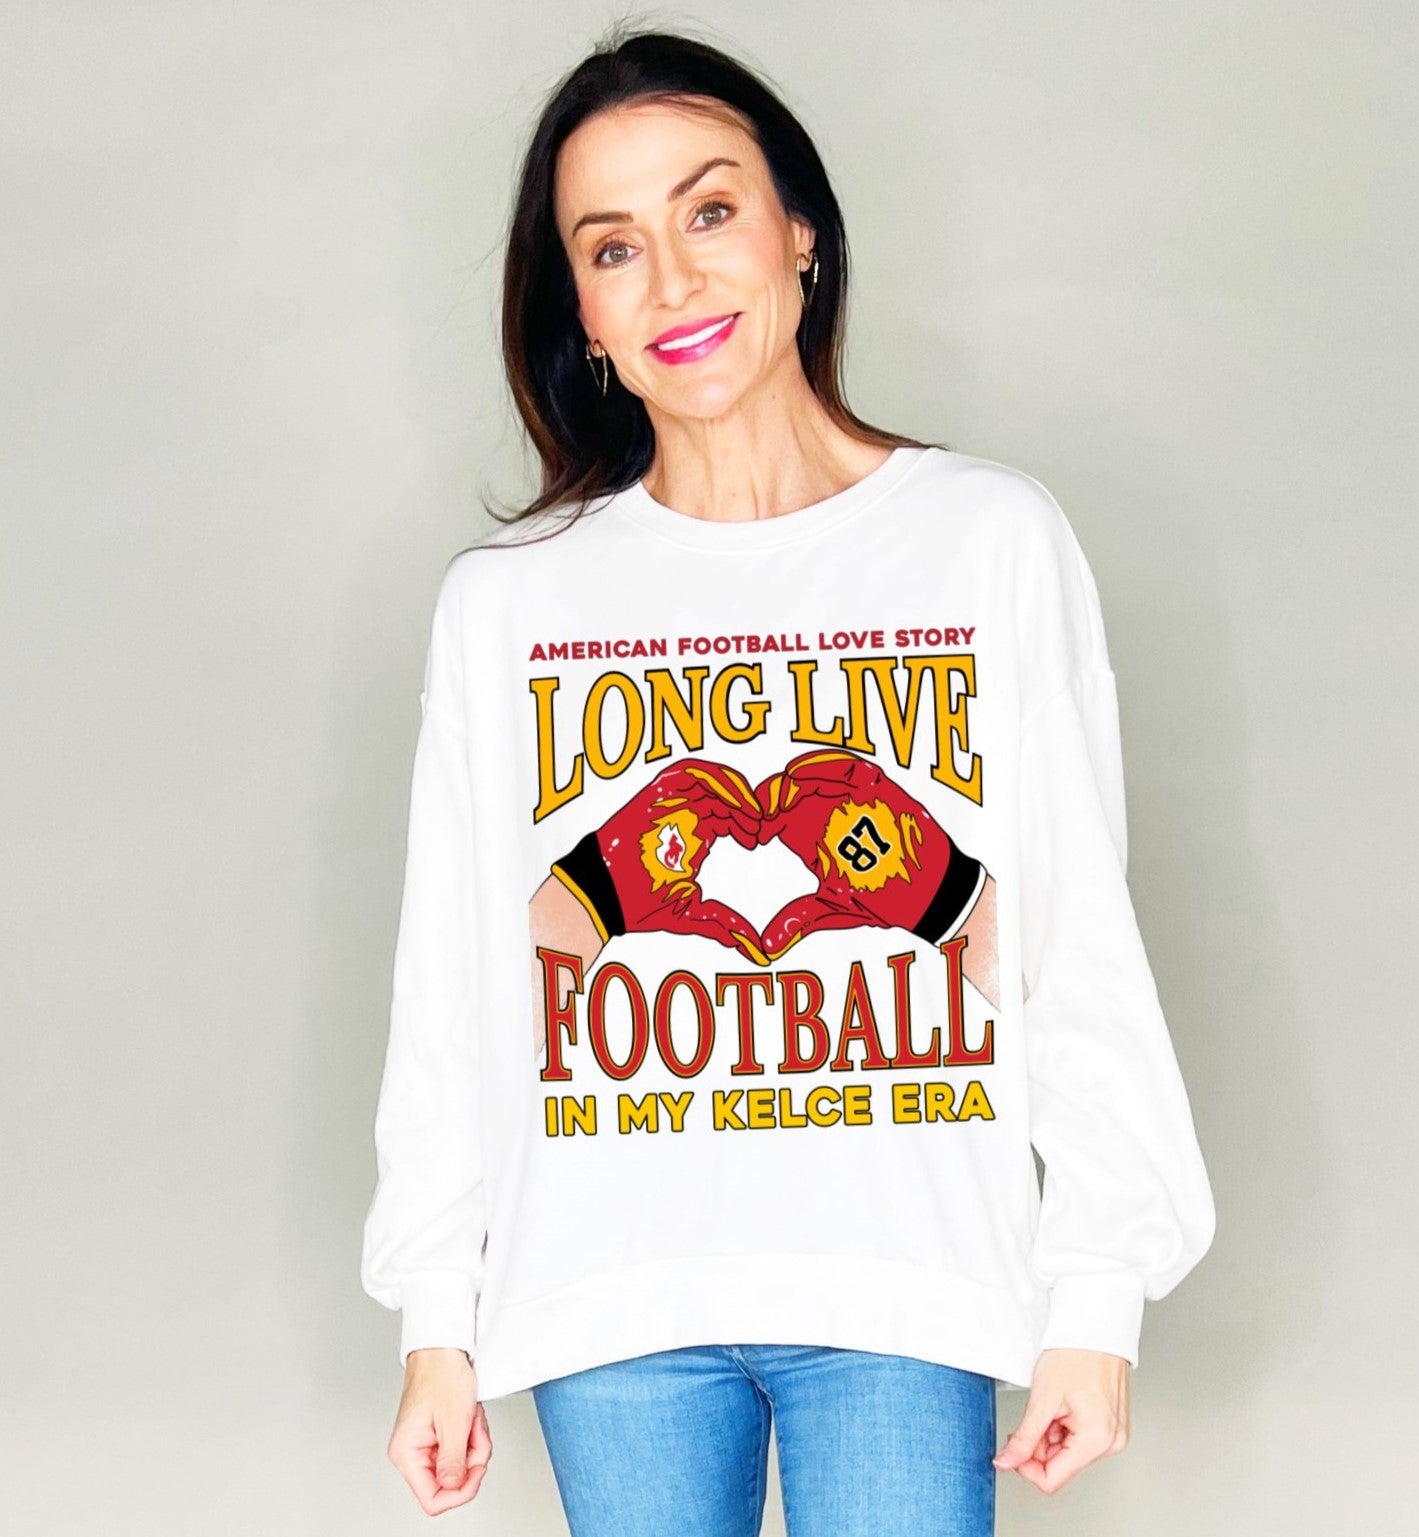 Long Live Football Heart Hands P&P Sweatshirt